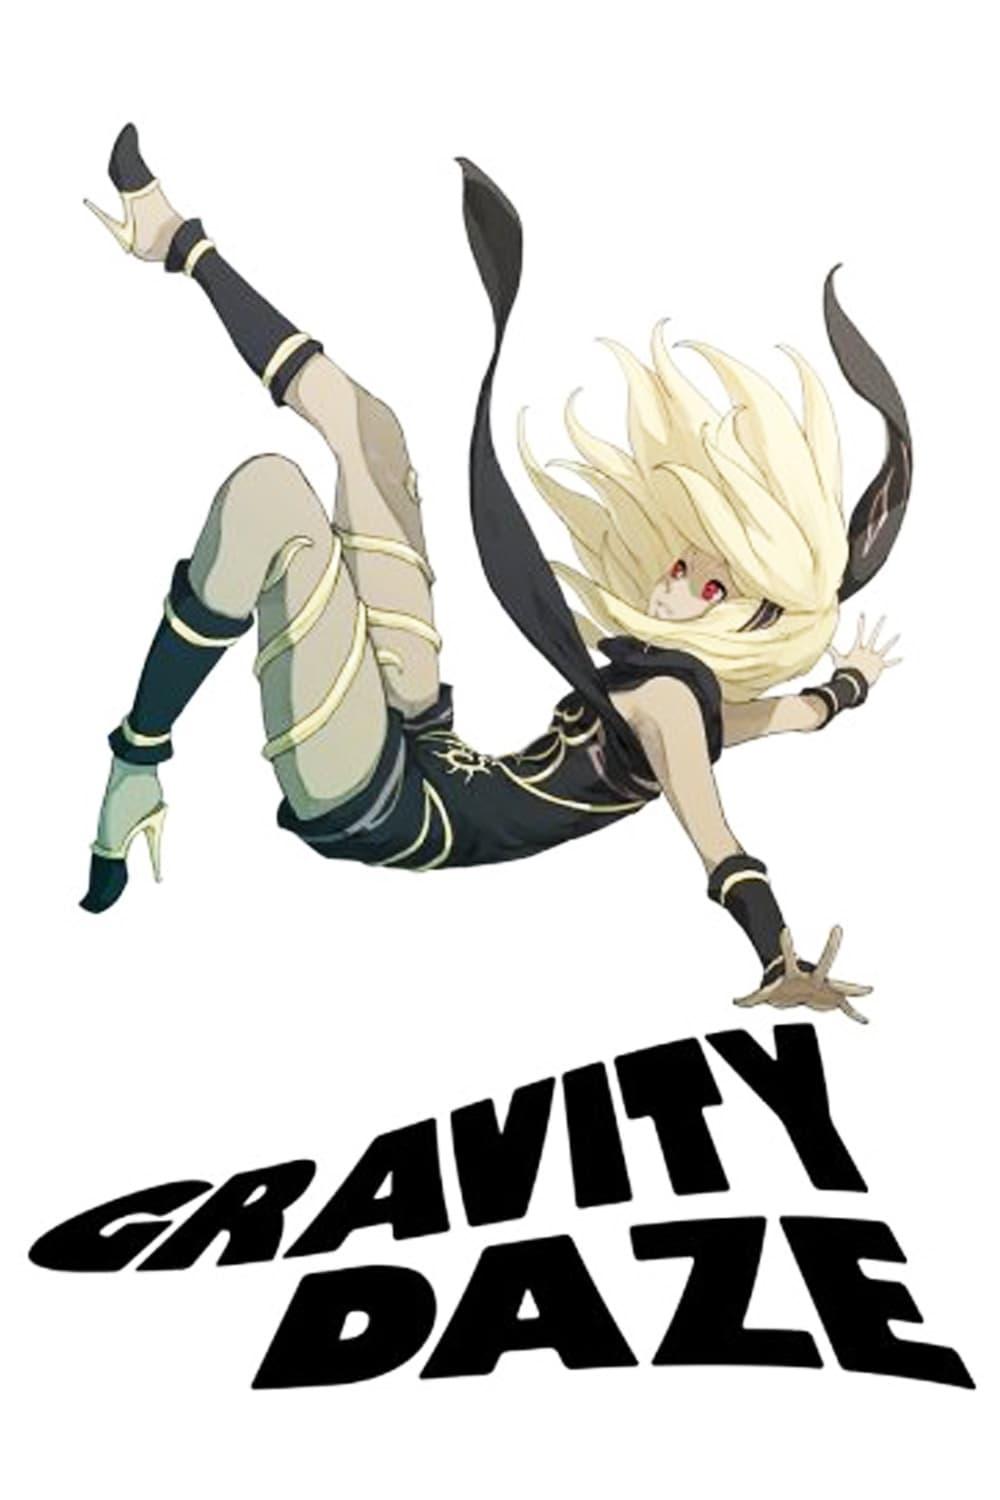 Gravity Daze the Animation: Ouverture poster